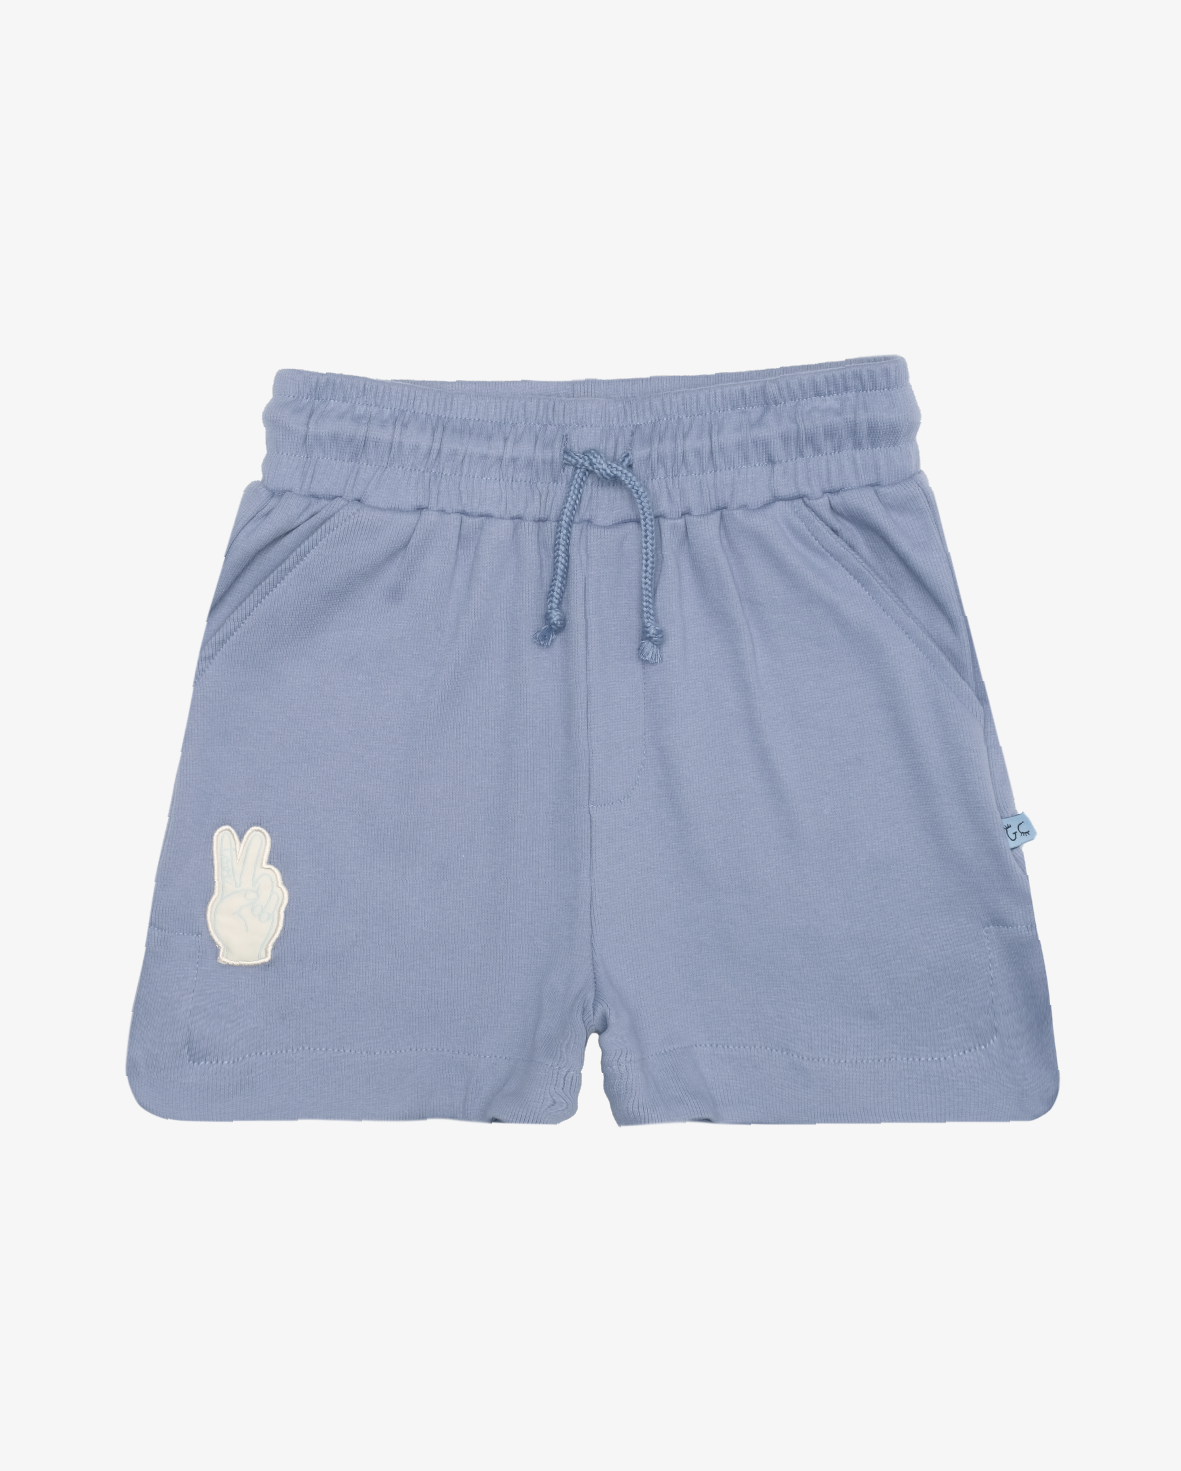 Simple Shorts - Blue Rib